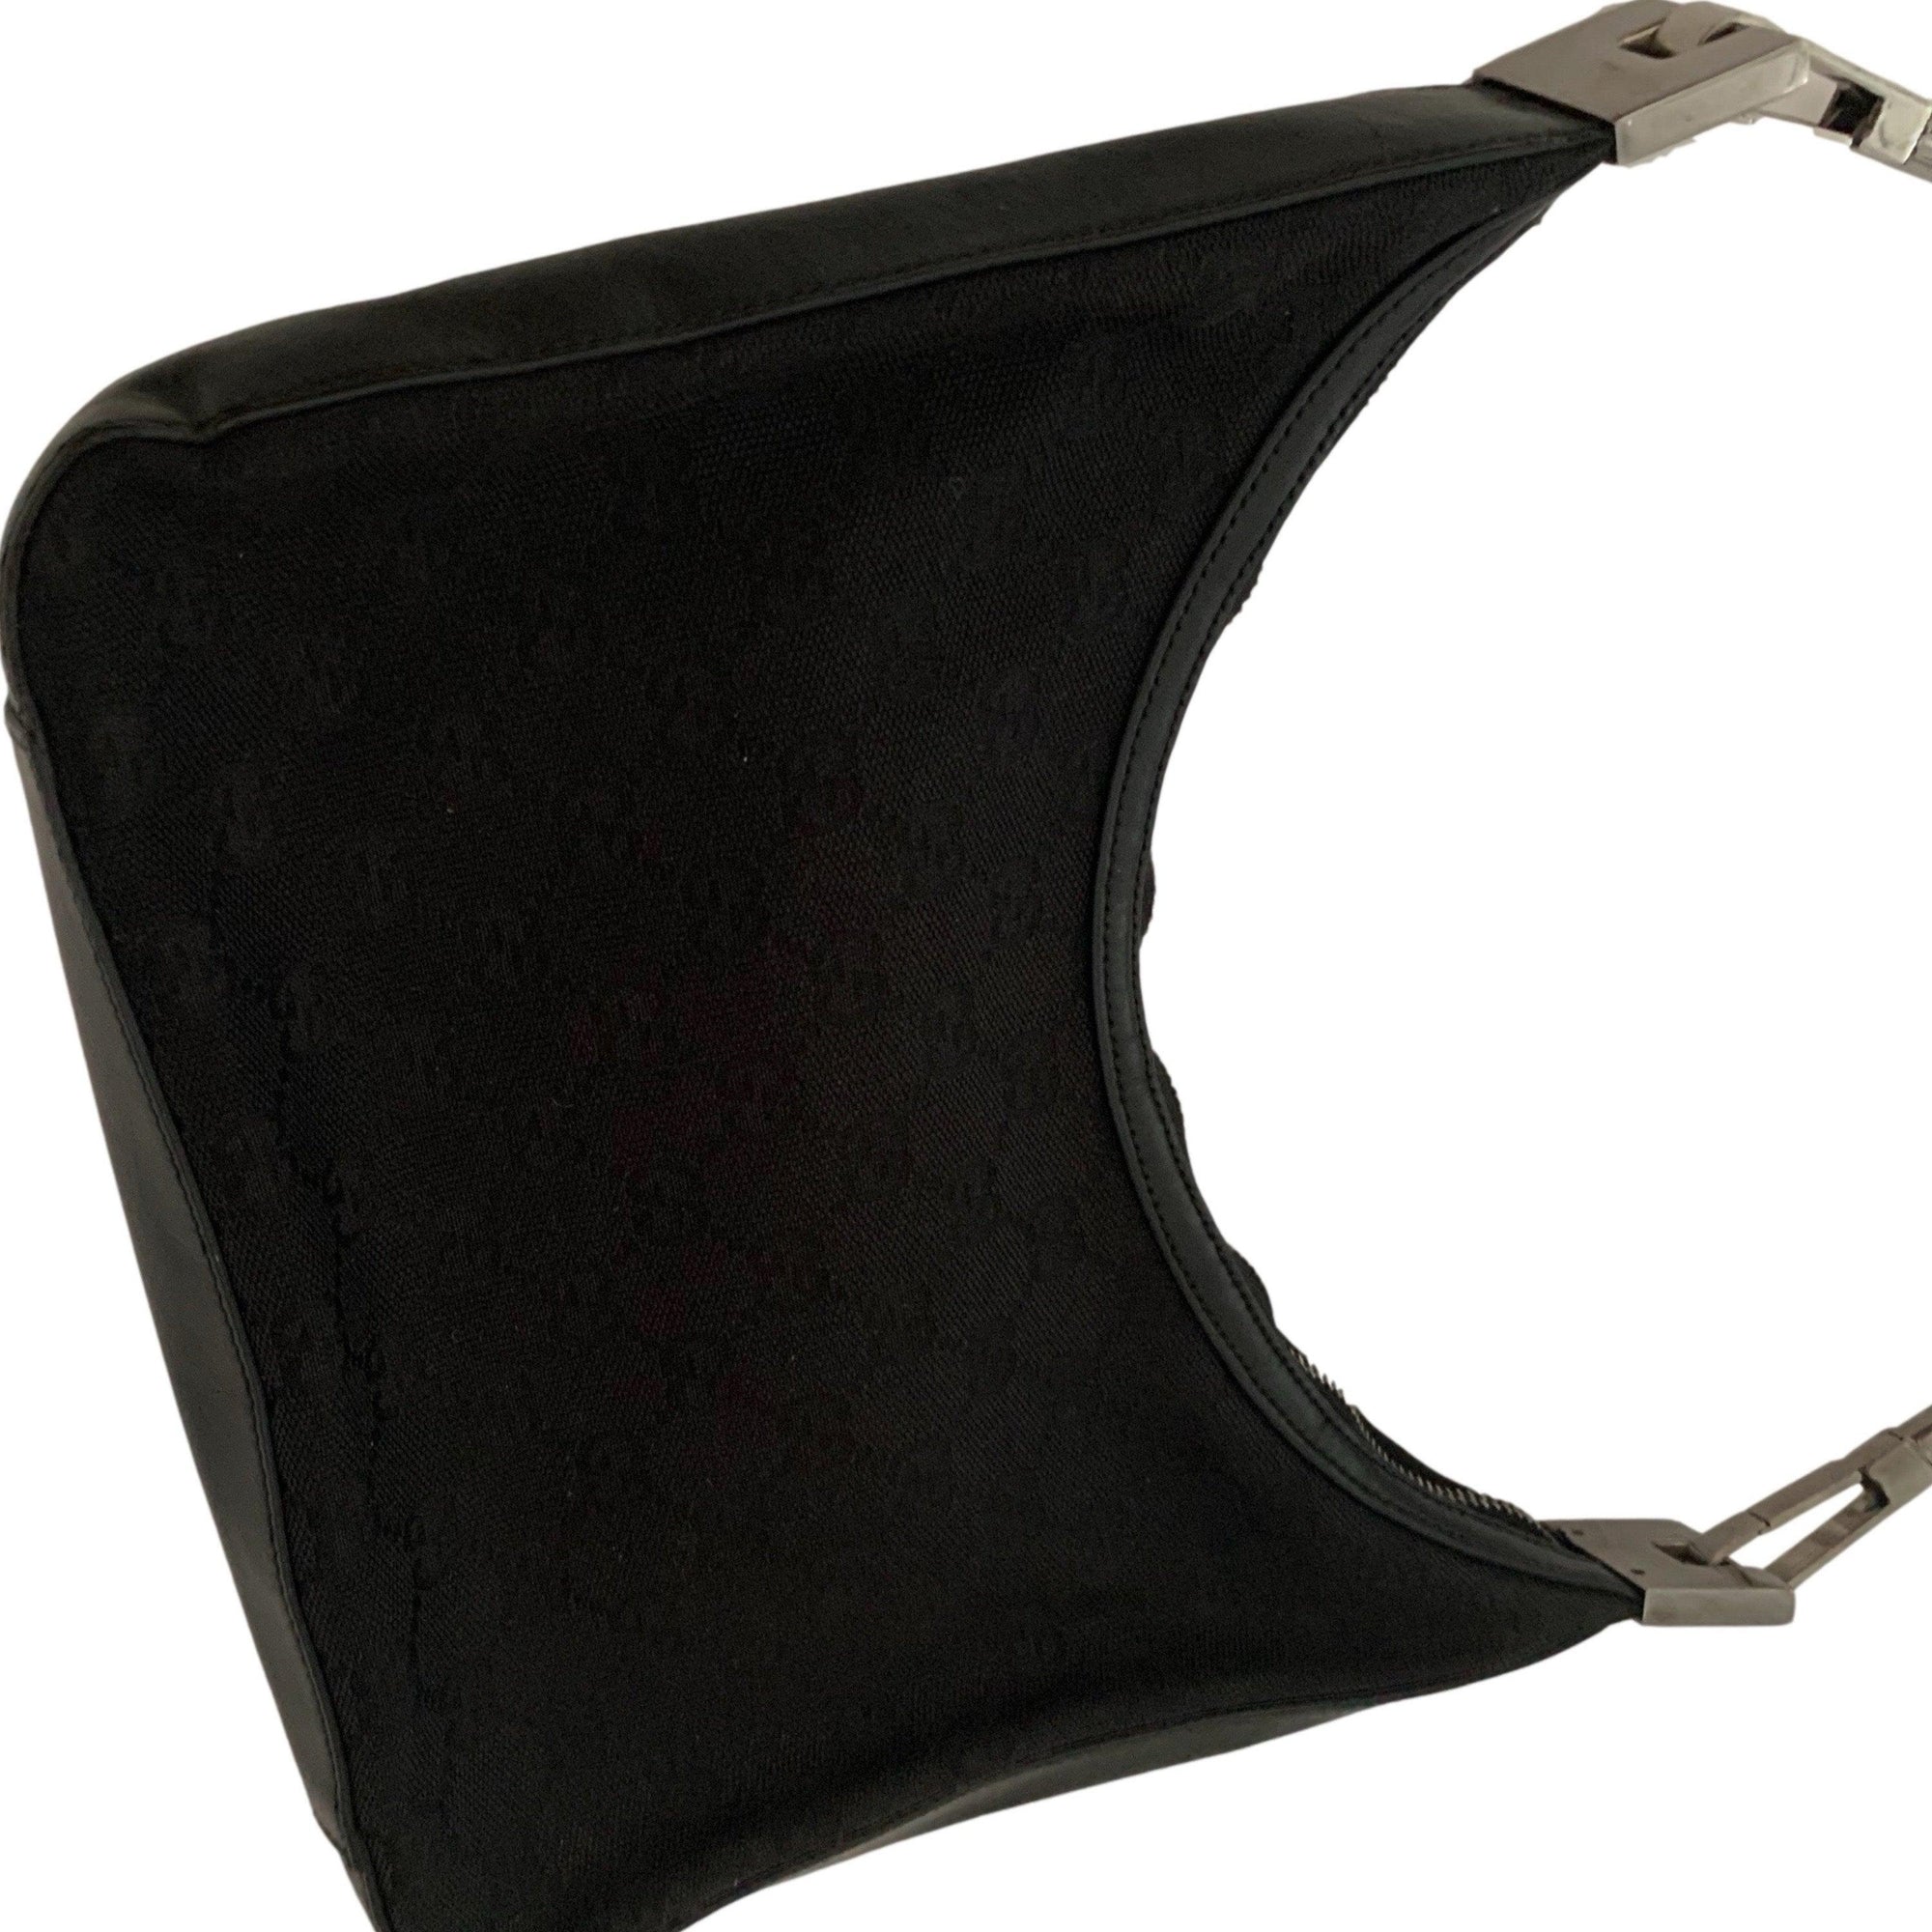 Gucci Black Canvas Leather Shoulder Bag - Handbags